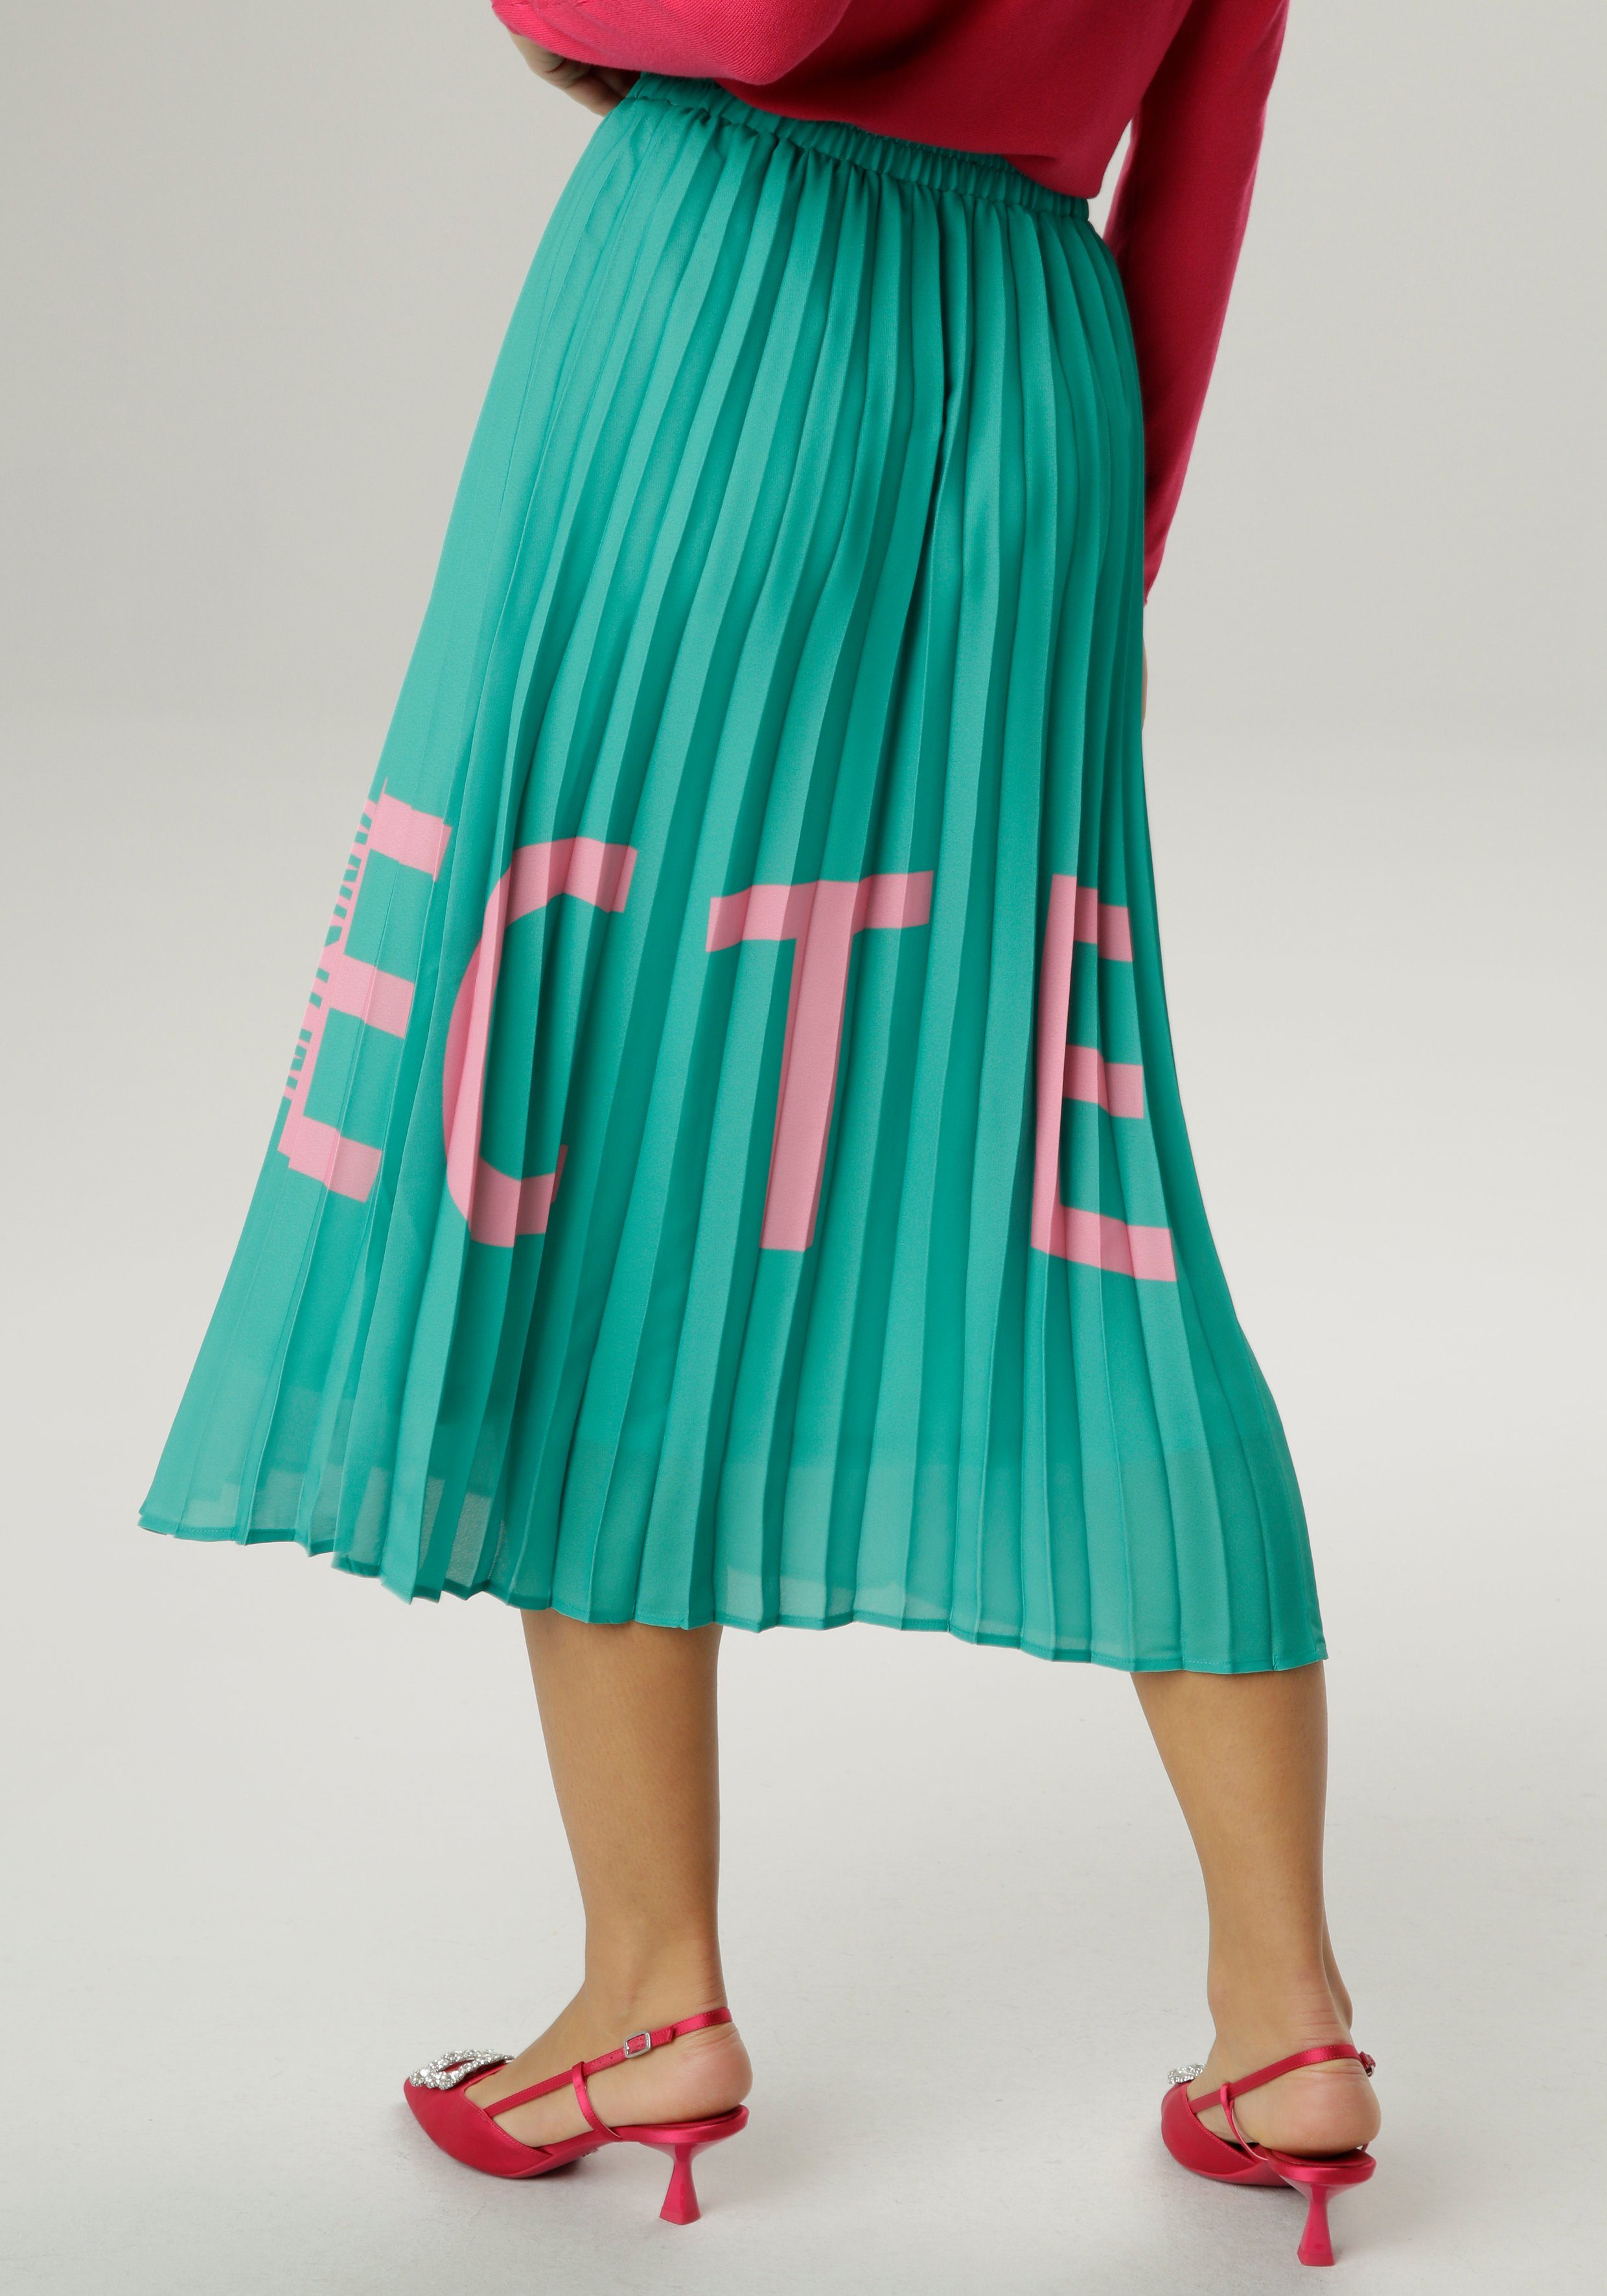 Aniston Knallfarbe in mit Plisseerock SELECTED Markenschriftzug grün-pink